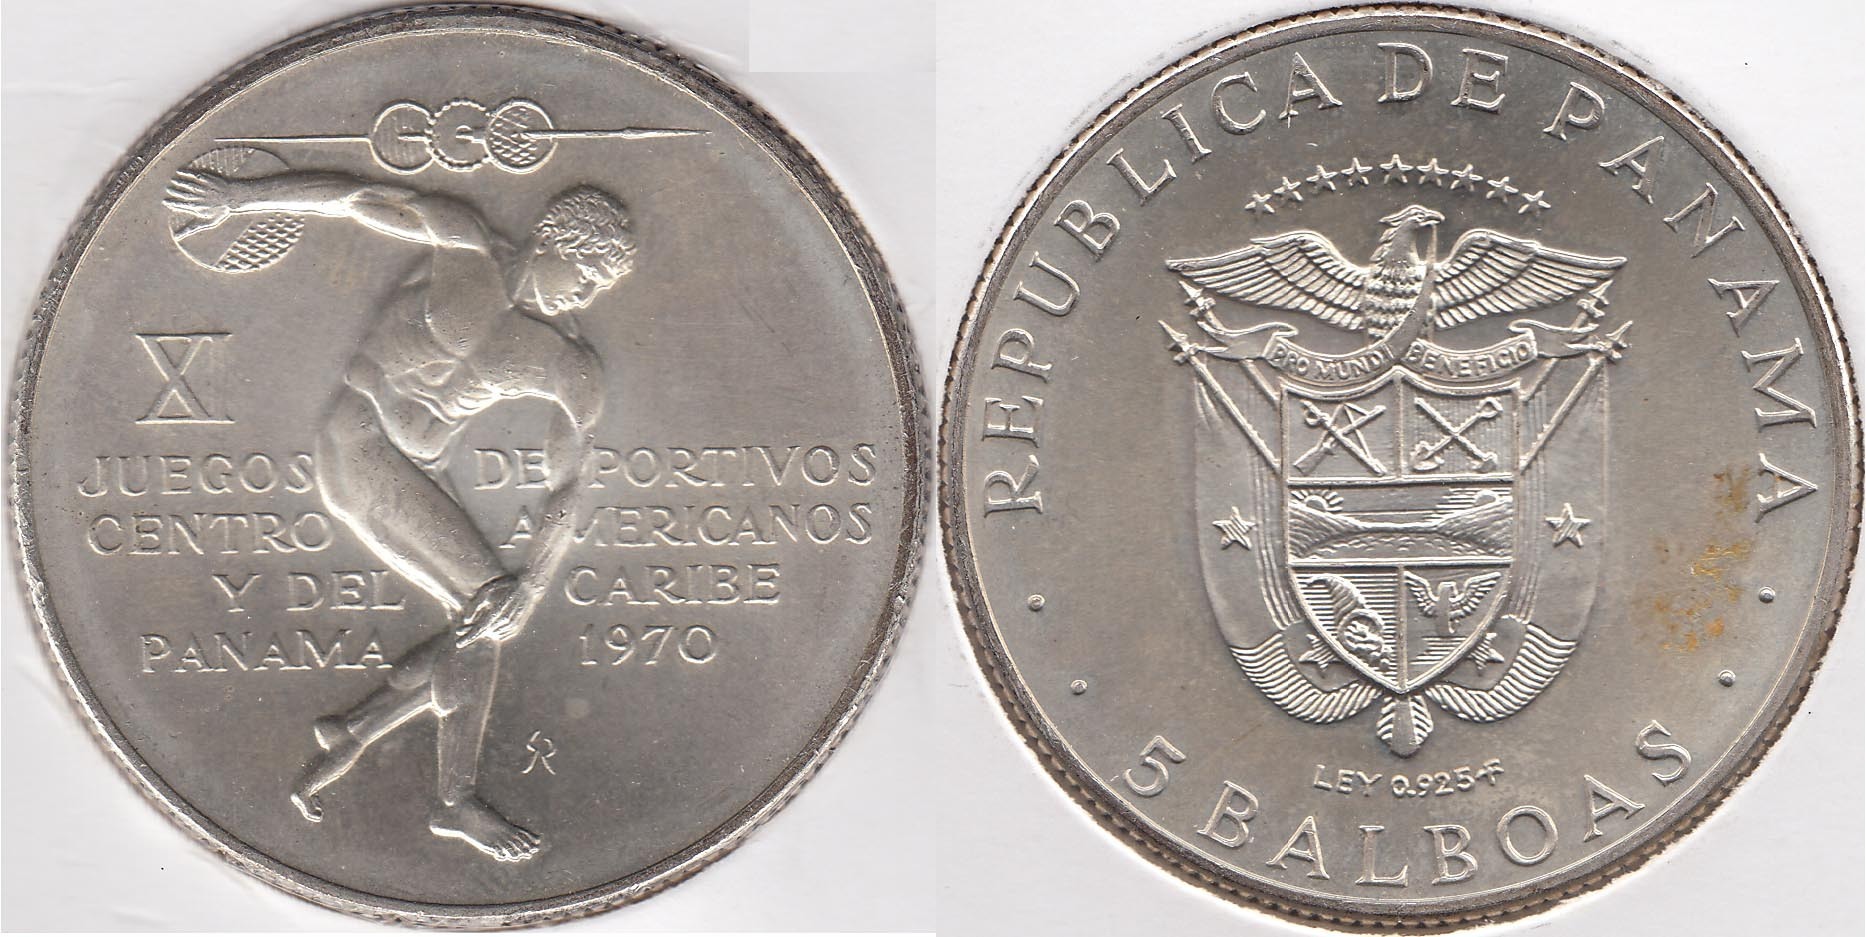 PANAMA. 5 BALBOAS DE 1970. PLATA 0.925.